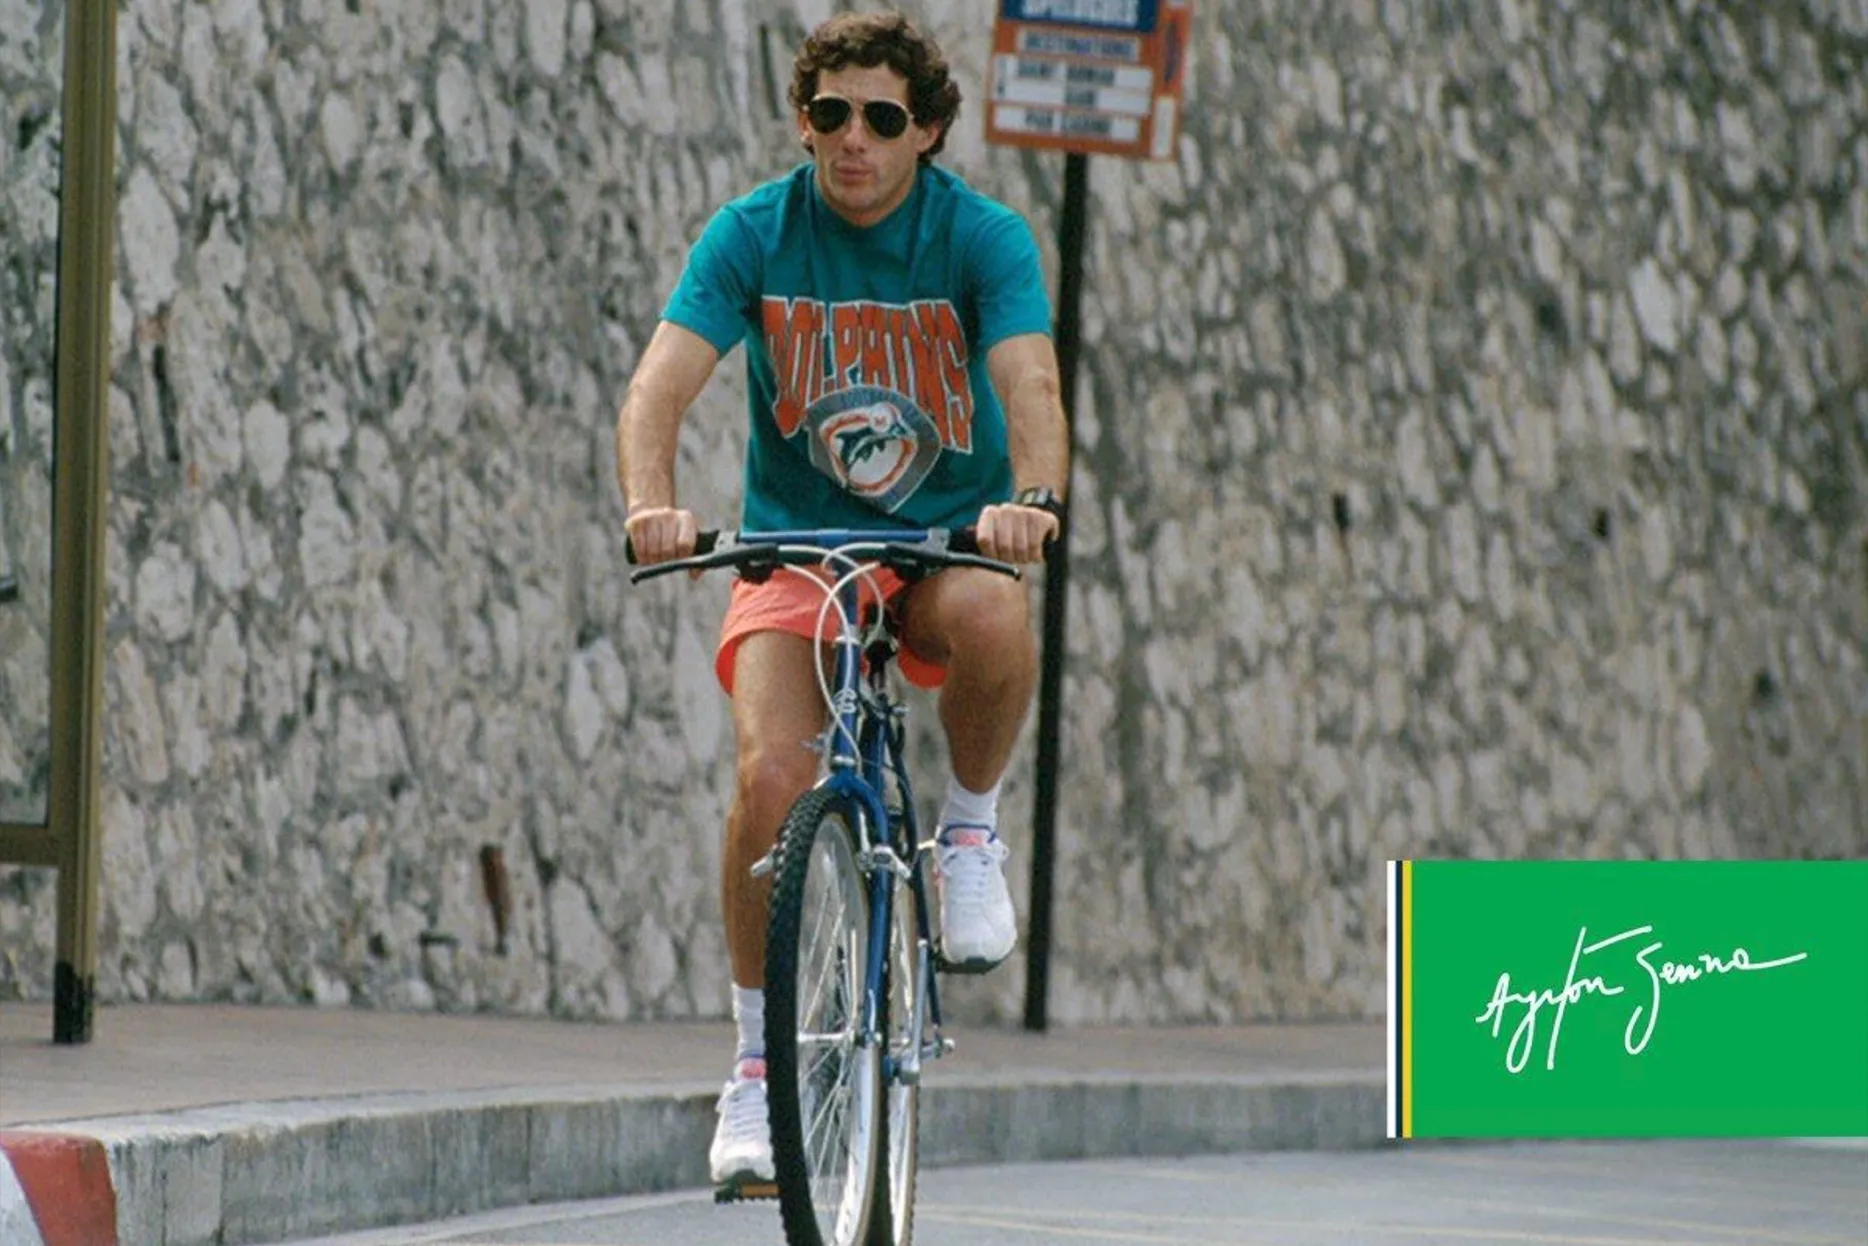 Ayrton Senna rides a bicycle wearing a Miami Dolphins t-shirt.